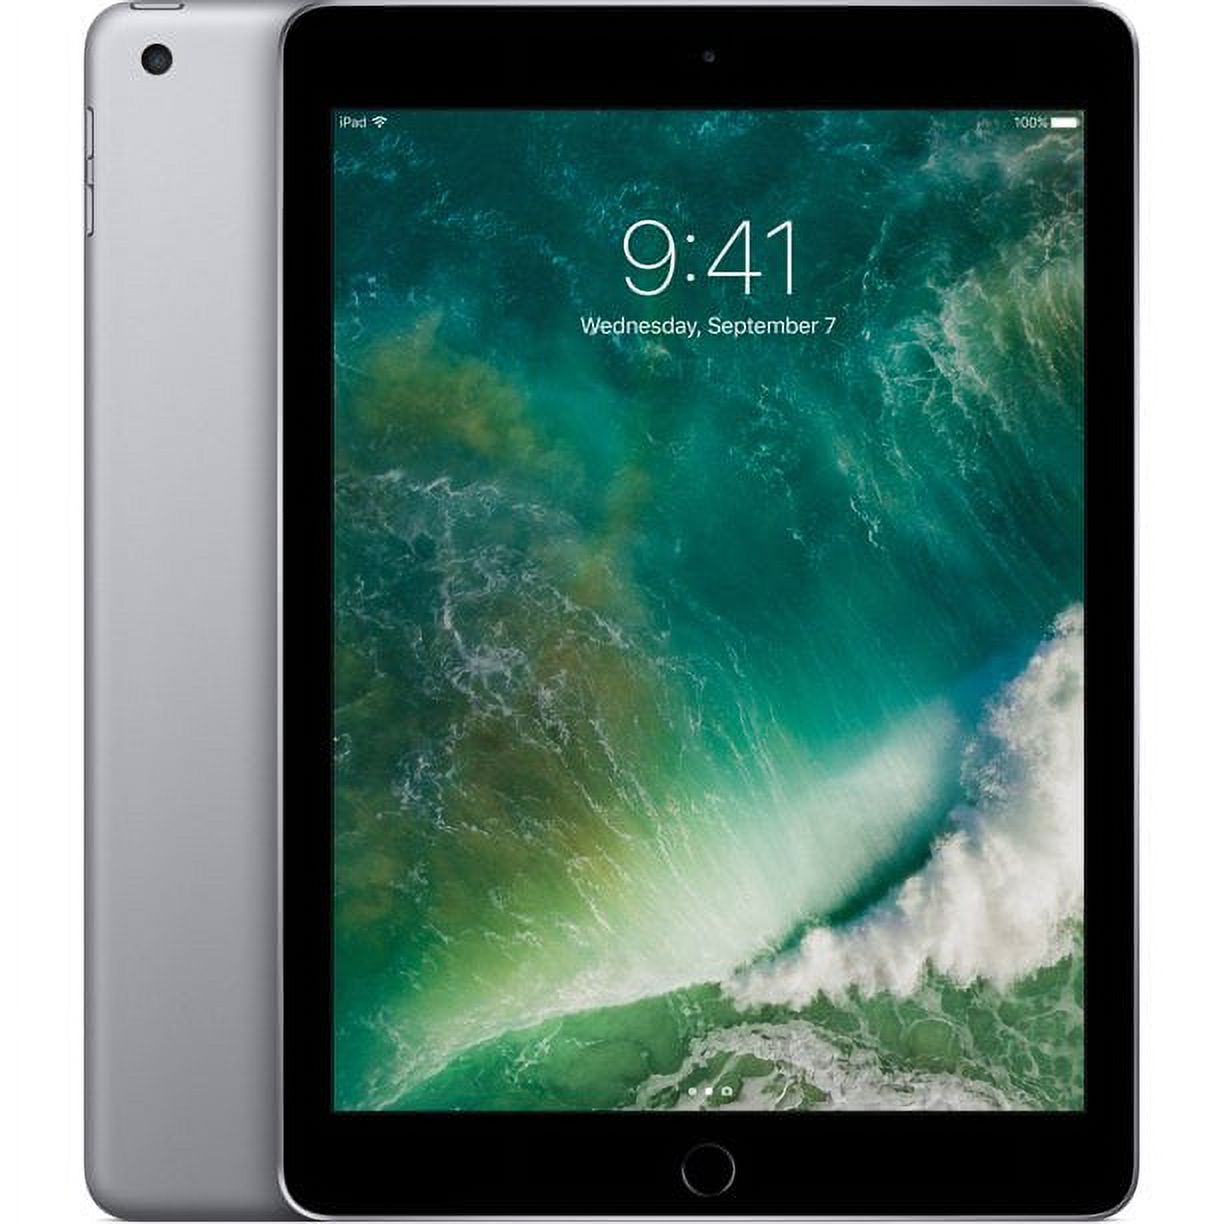 Restored Apple iPad 5th Gen 32GB Wi-Fi, 9.7in - Space Gray (Refurbished) - image 1 of 2